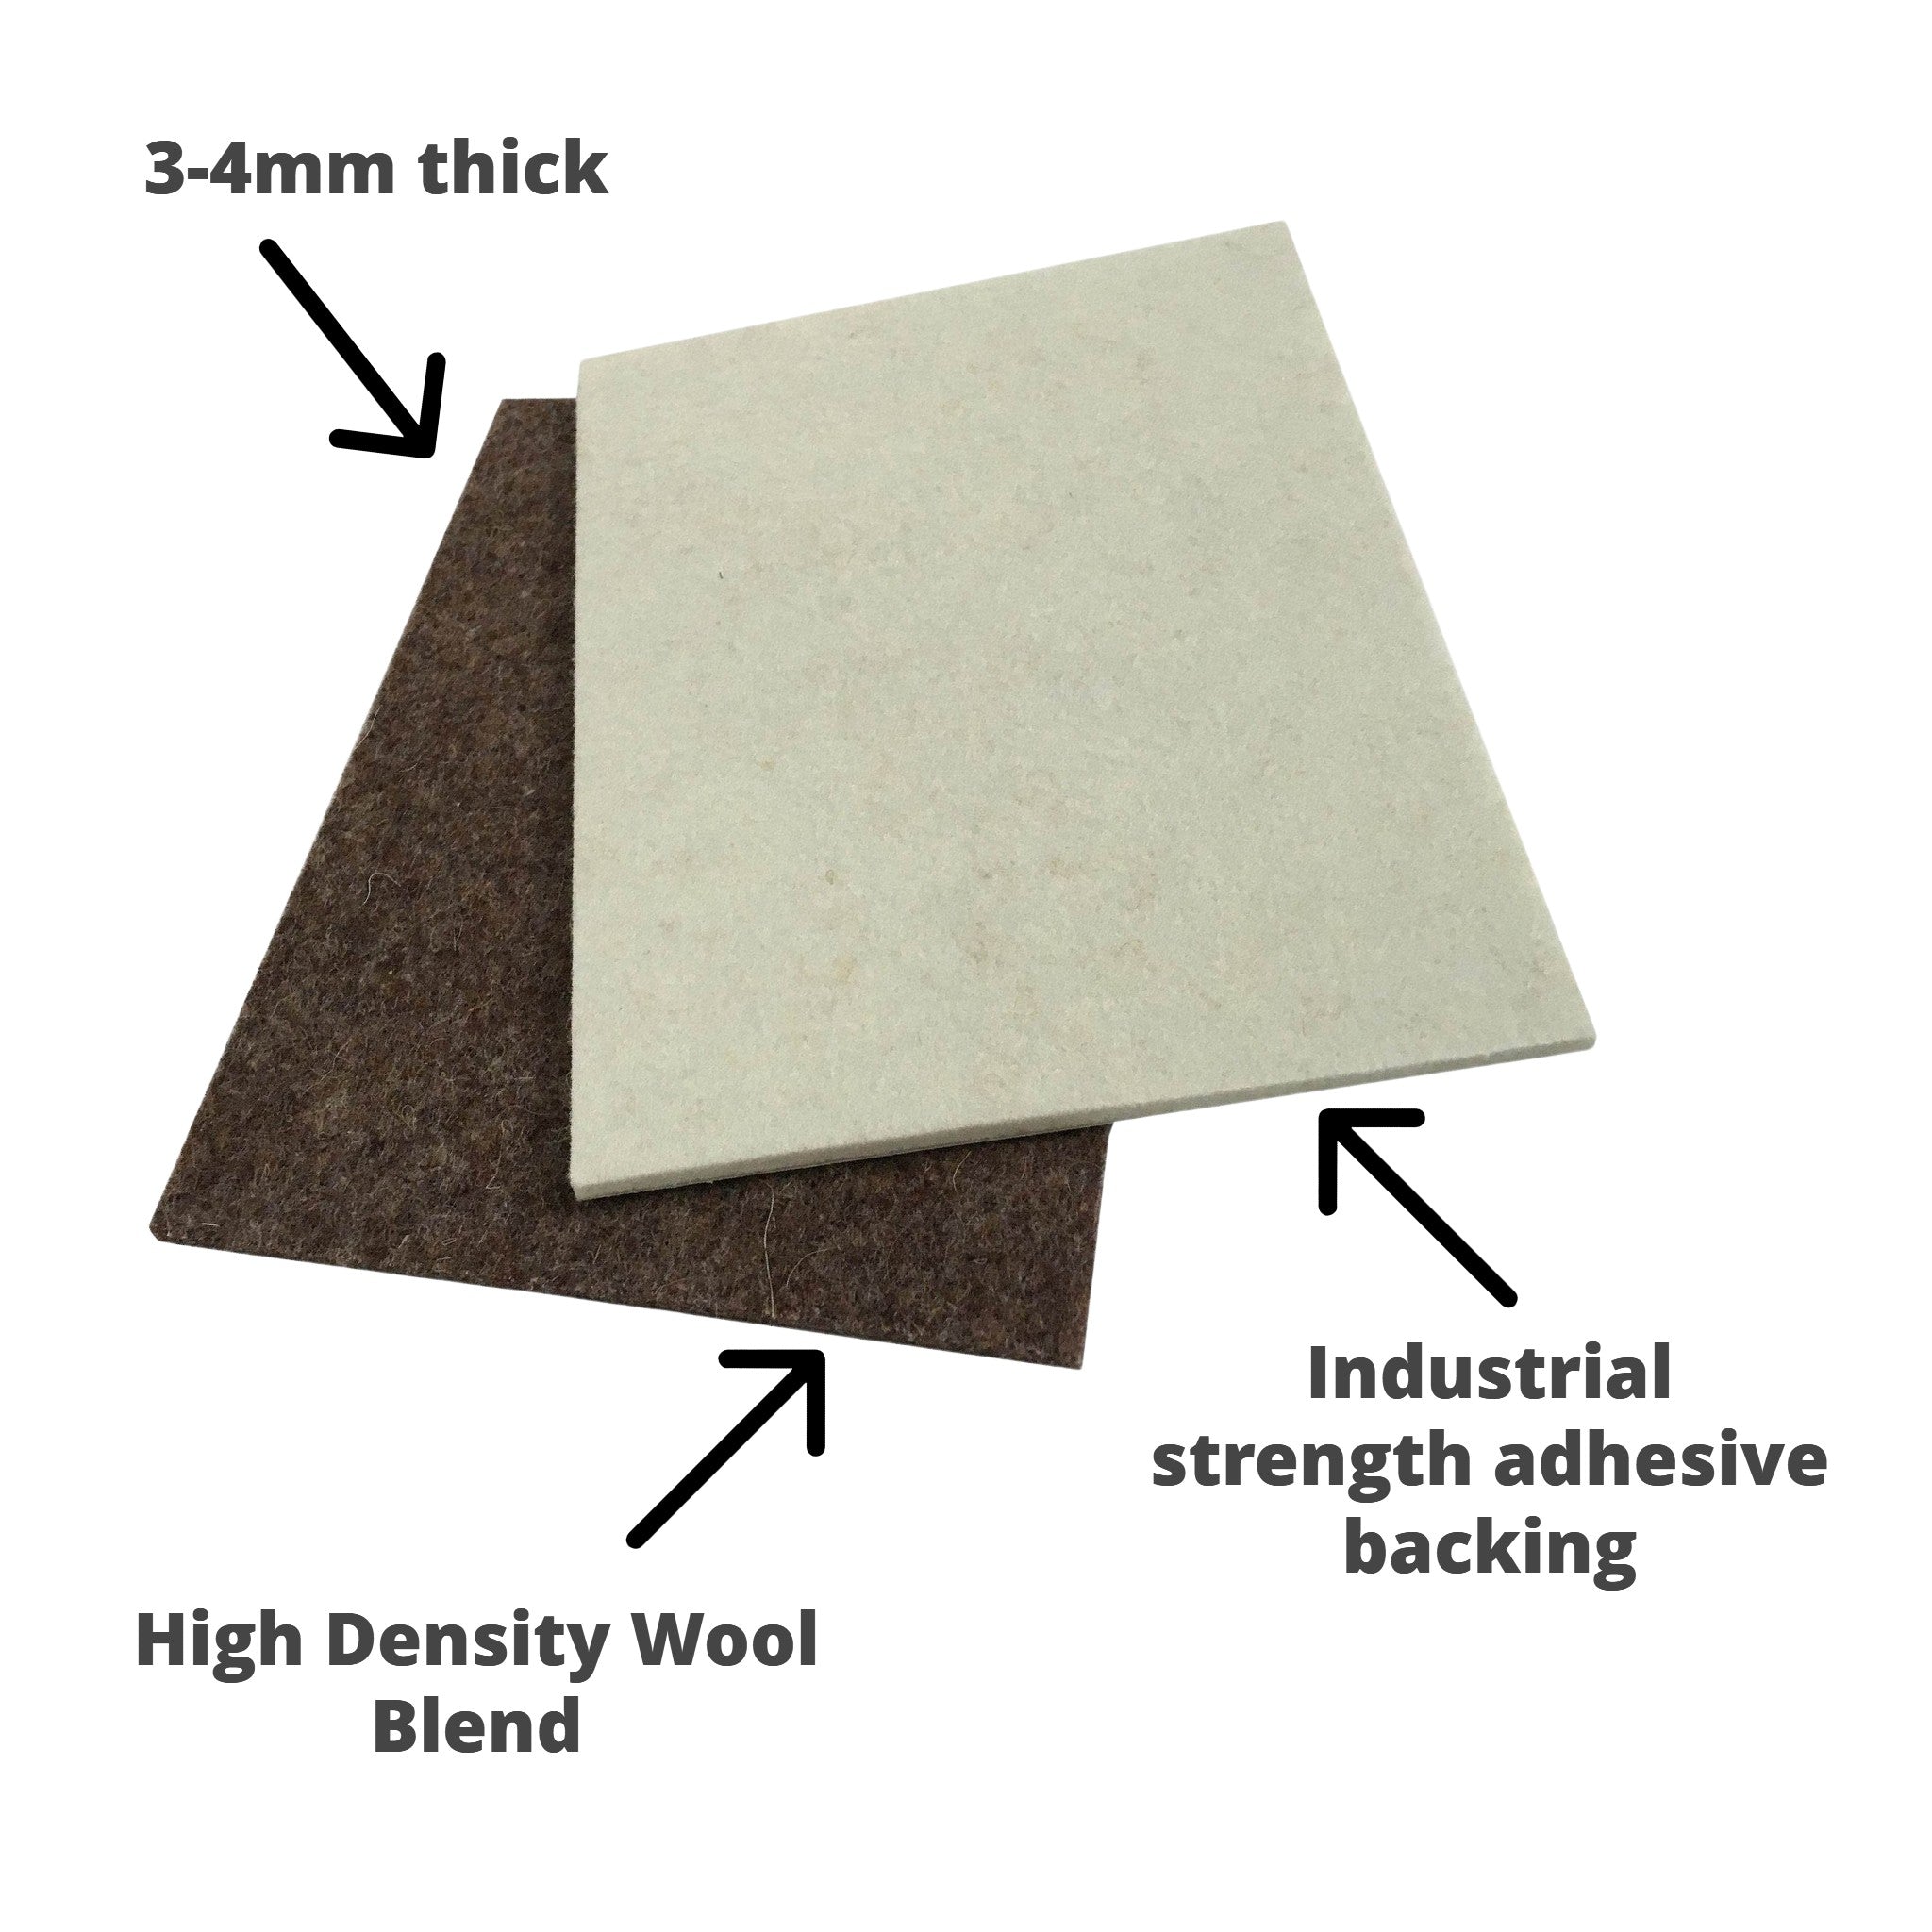 Industrial Strengh Flexi-Felt Adhesive Pads floor protectorsprotectors